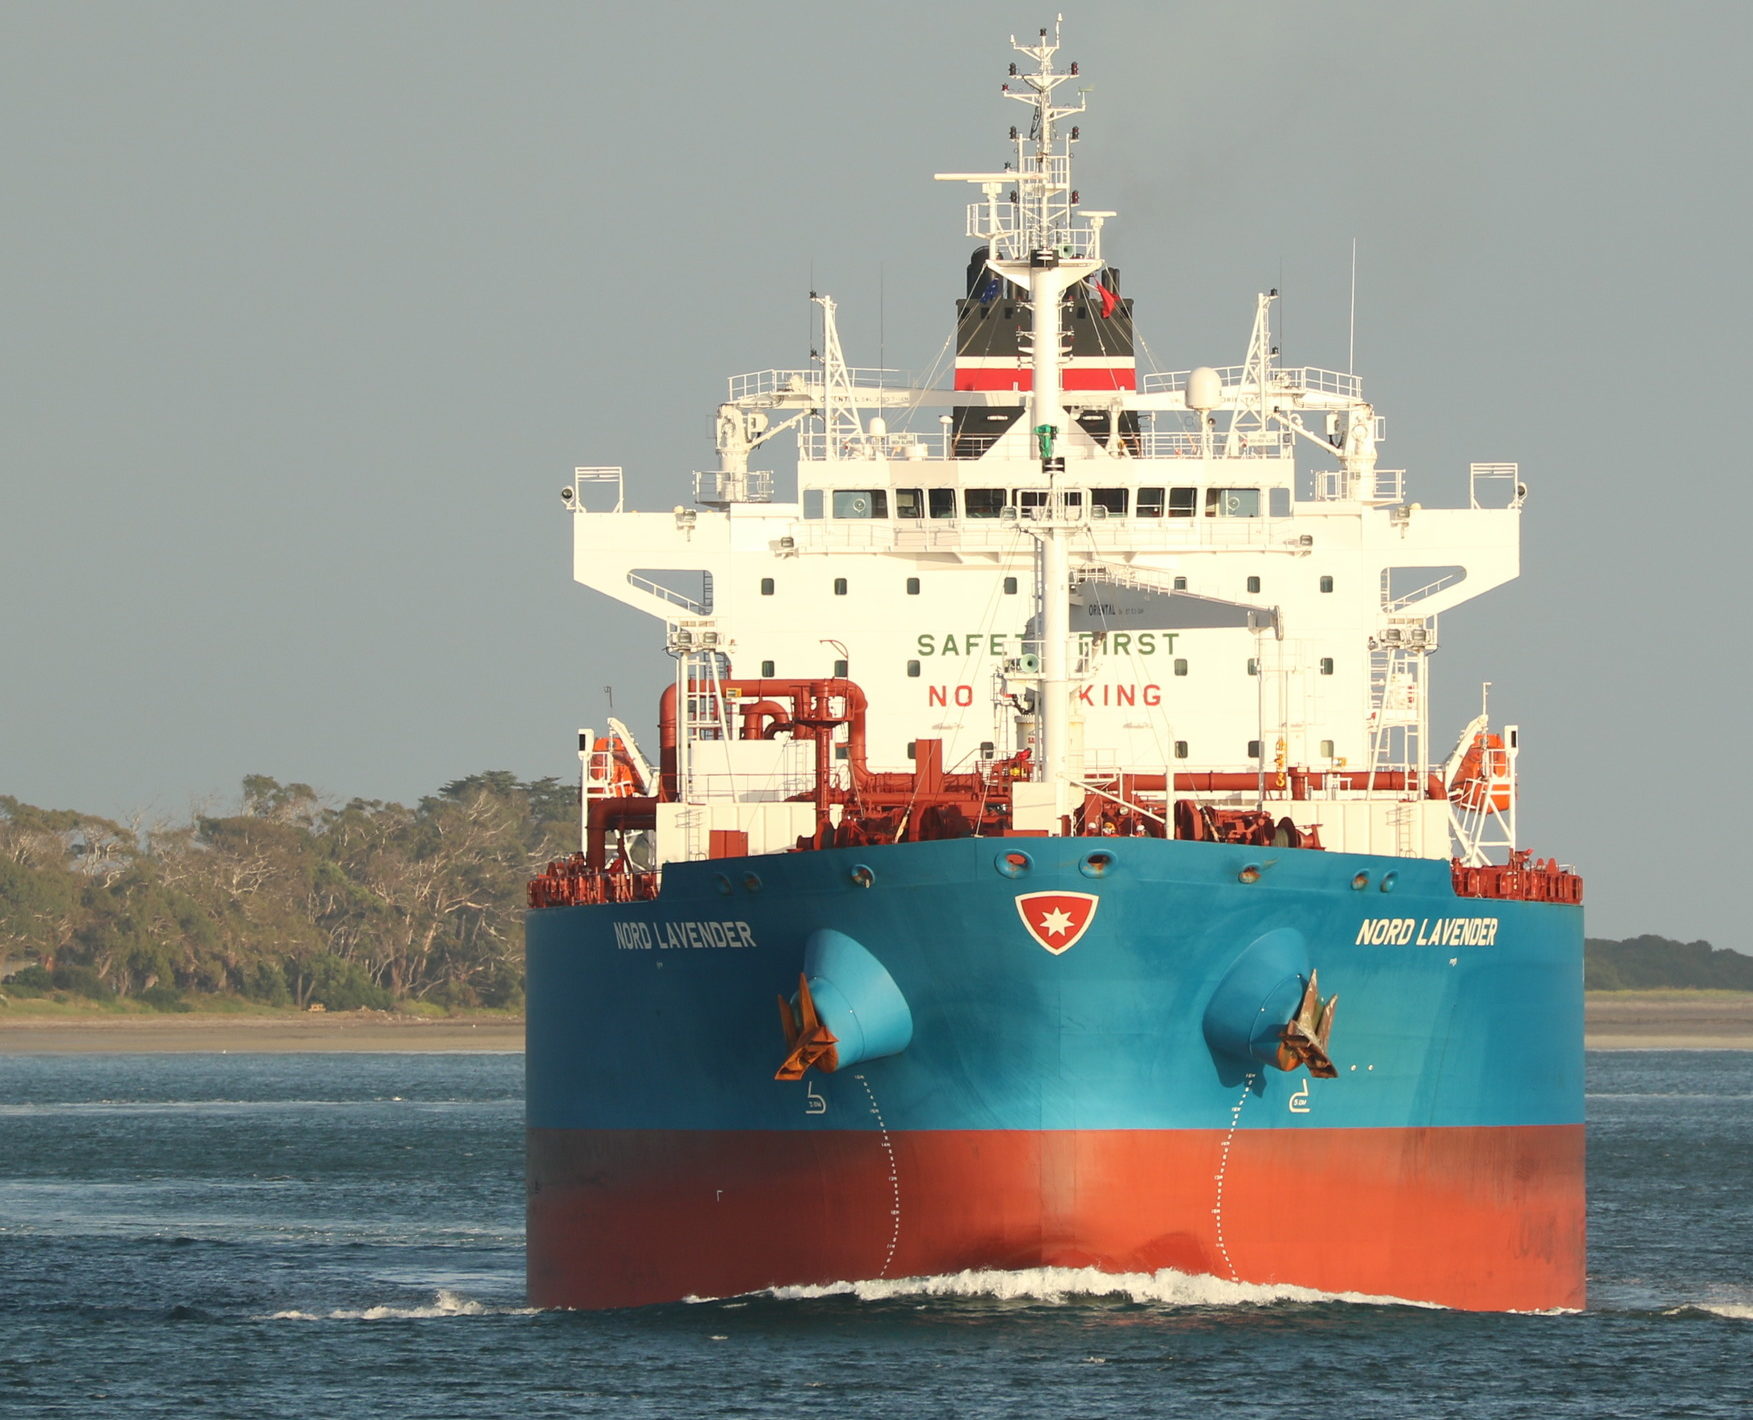 Crude oil tanker repels pirates in Arabian Sea